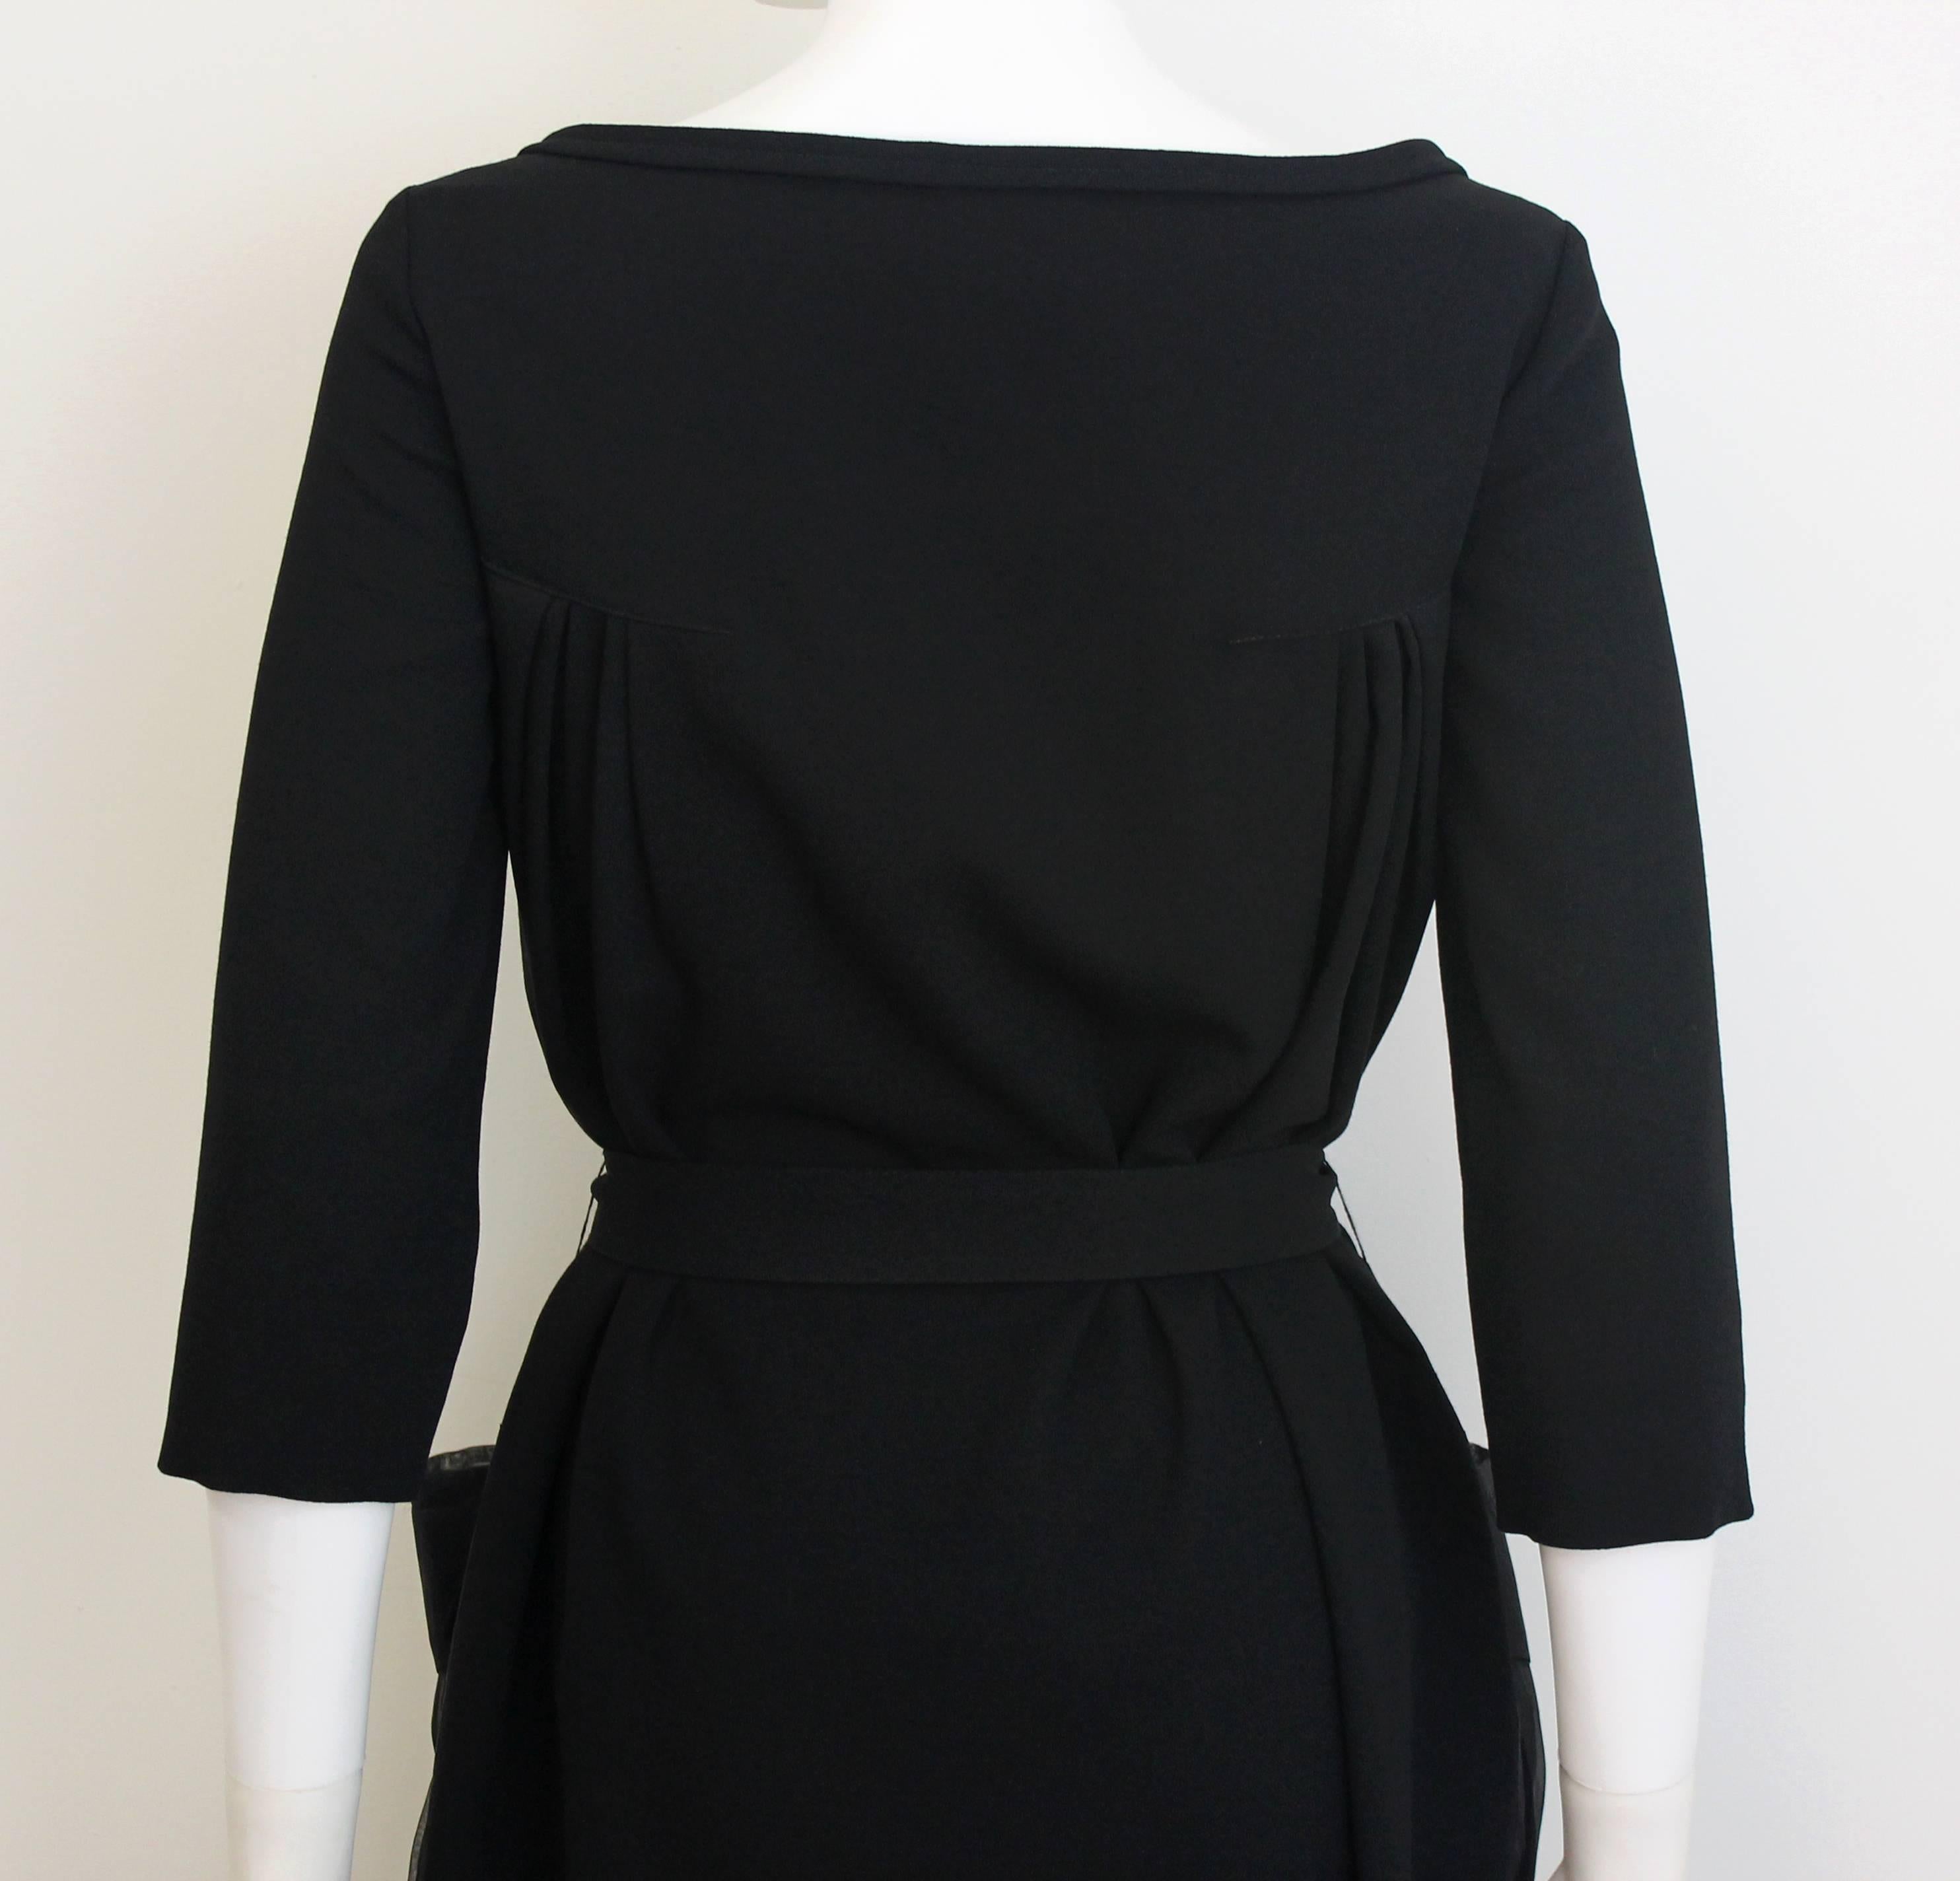 Christian Dior Black Dress with Sheer Pockets 1